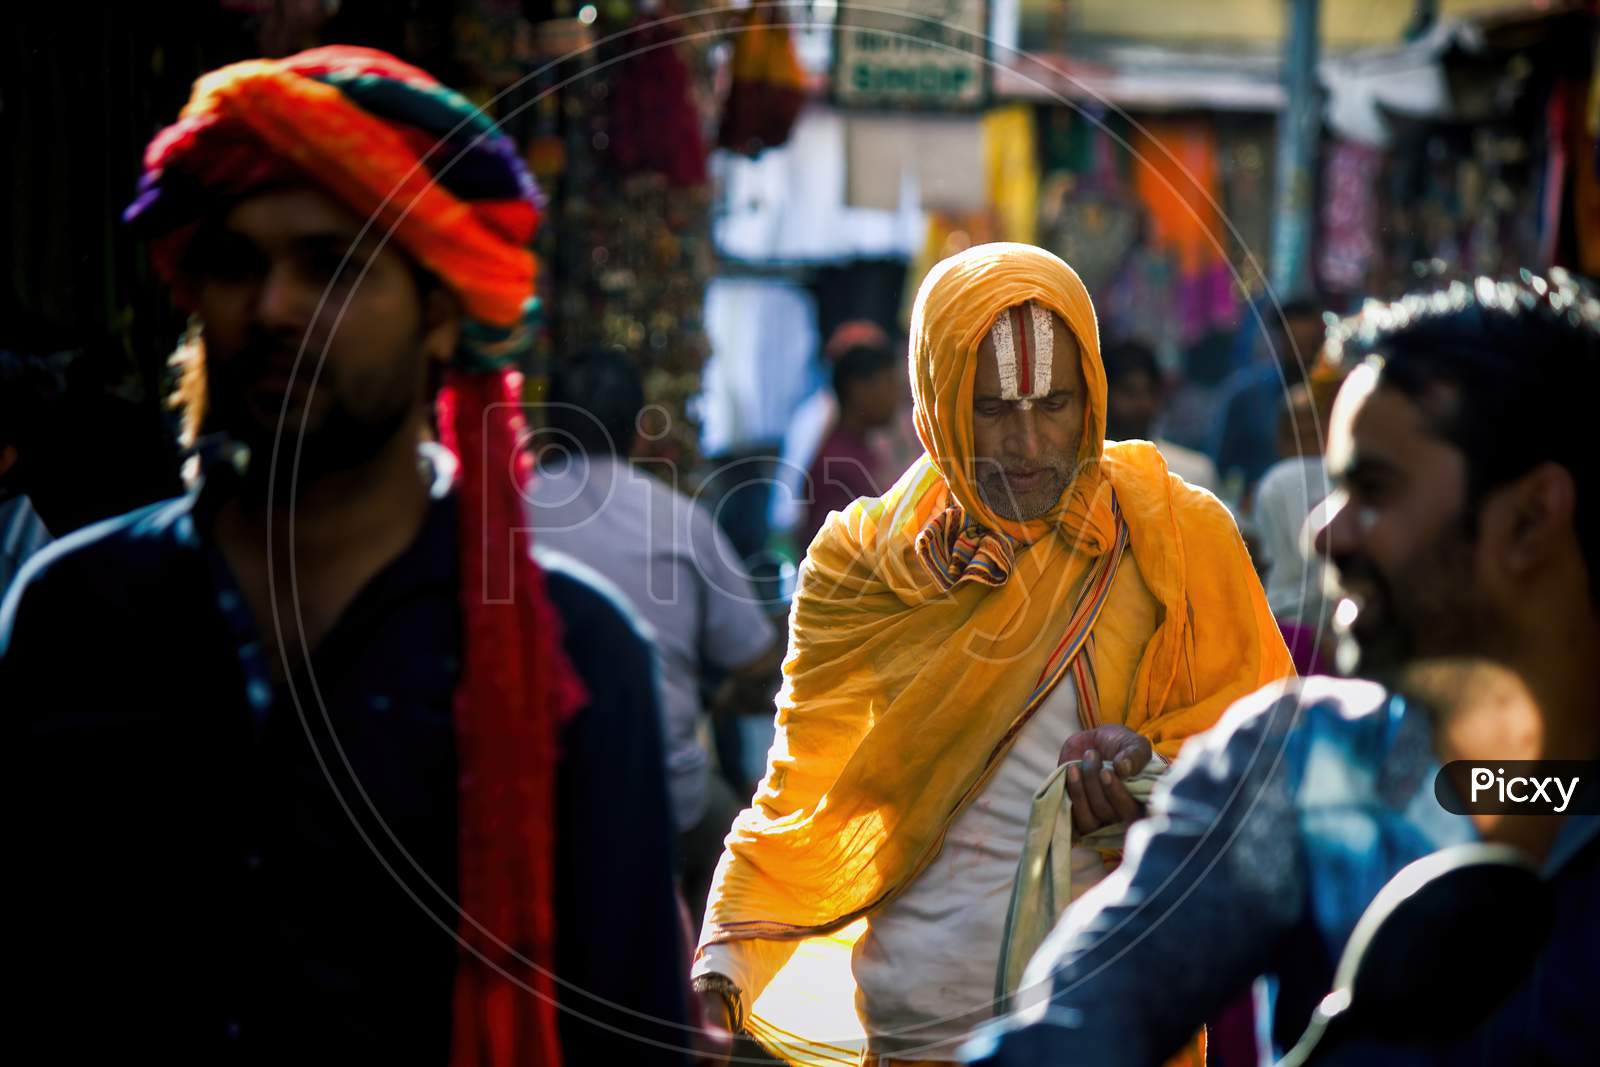 Pushkar, India - November 10, 2016: A Hindu Man With Vishnu Tilak On His Forehead And Orange Ethnic Wear Walking In Famous Pushkar Mela Or Fair In The State Of Rajasthan